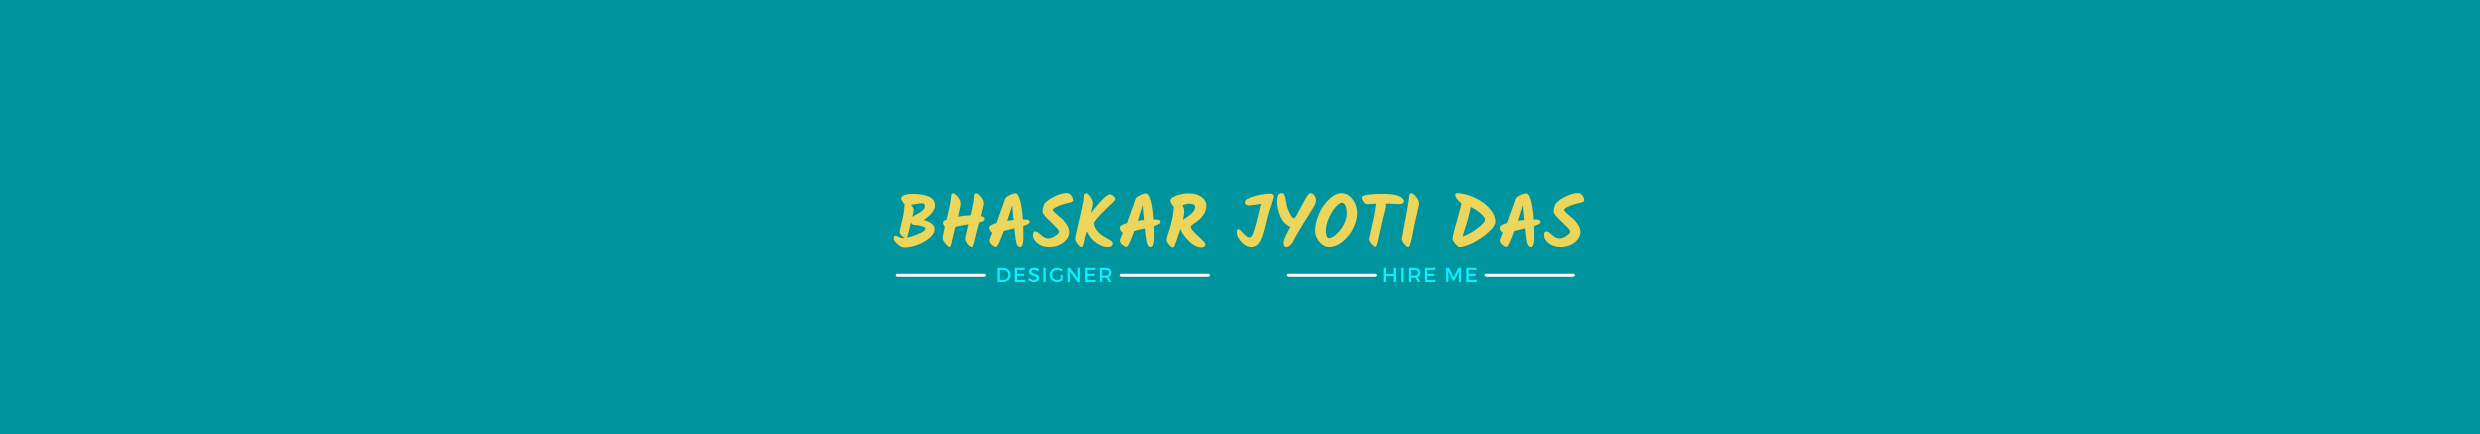 Bhaskar Jyoti Das's profile banner